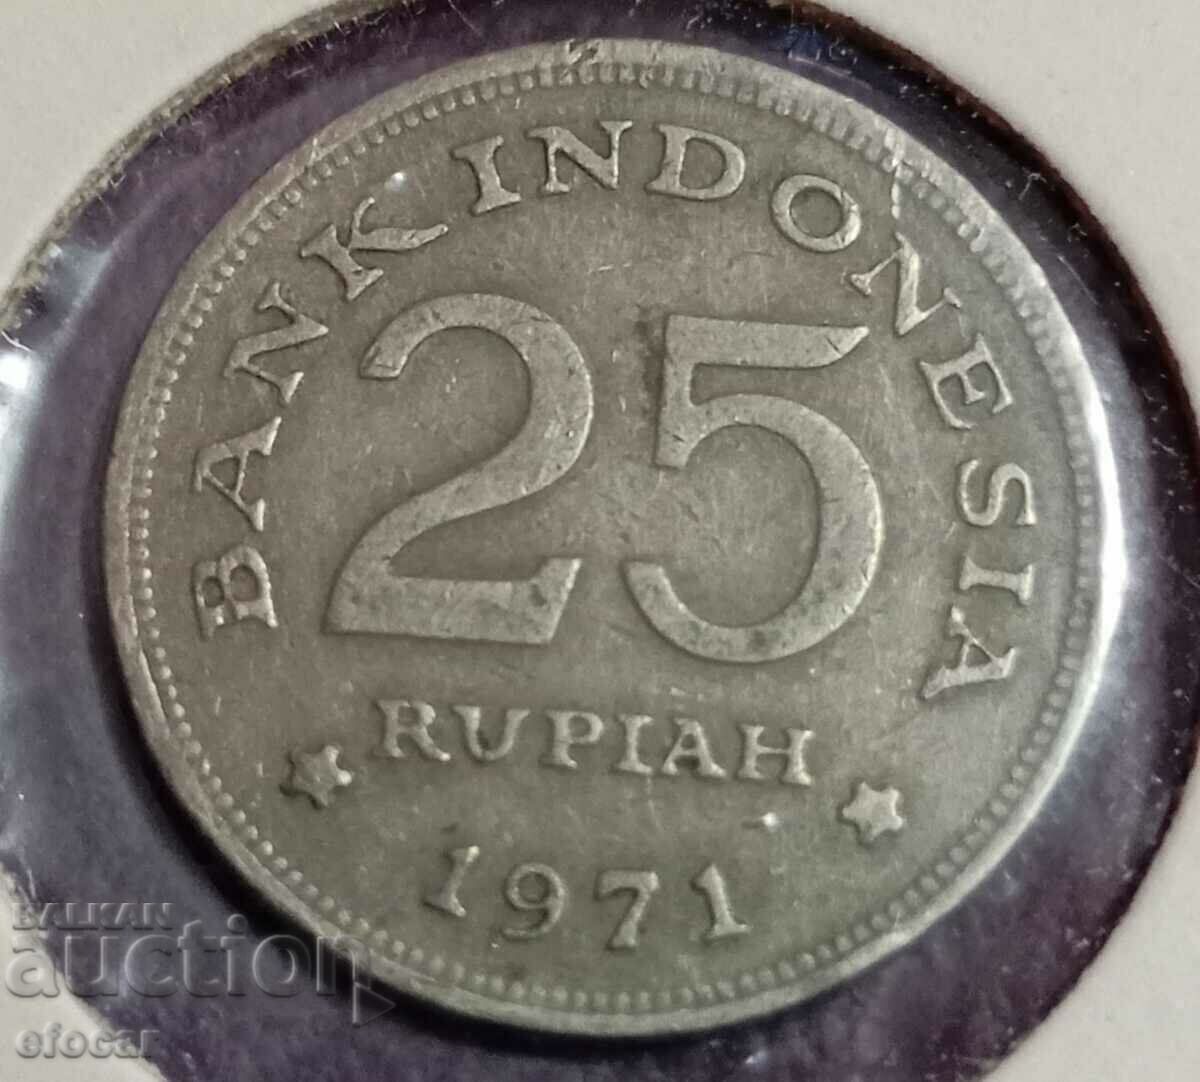 25 de rupie Indonezia 1971